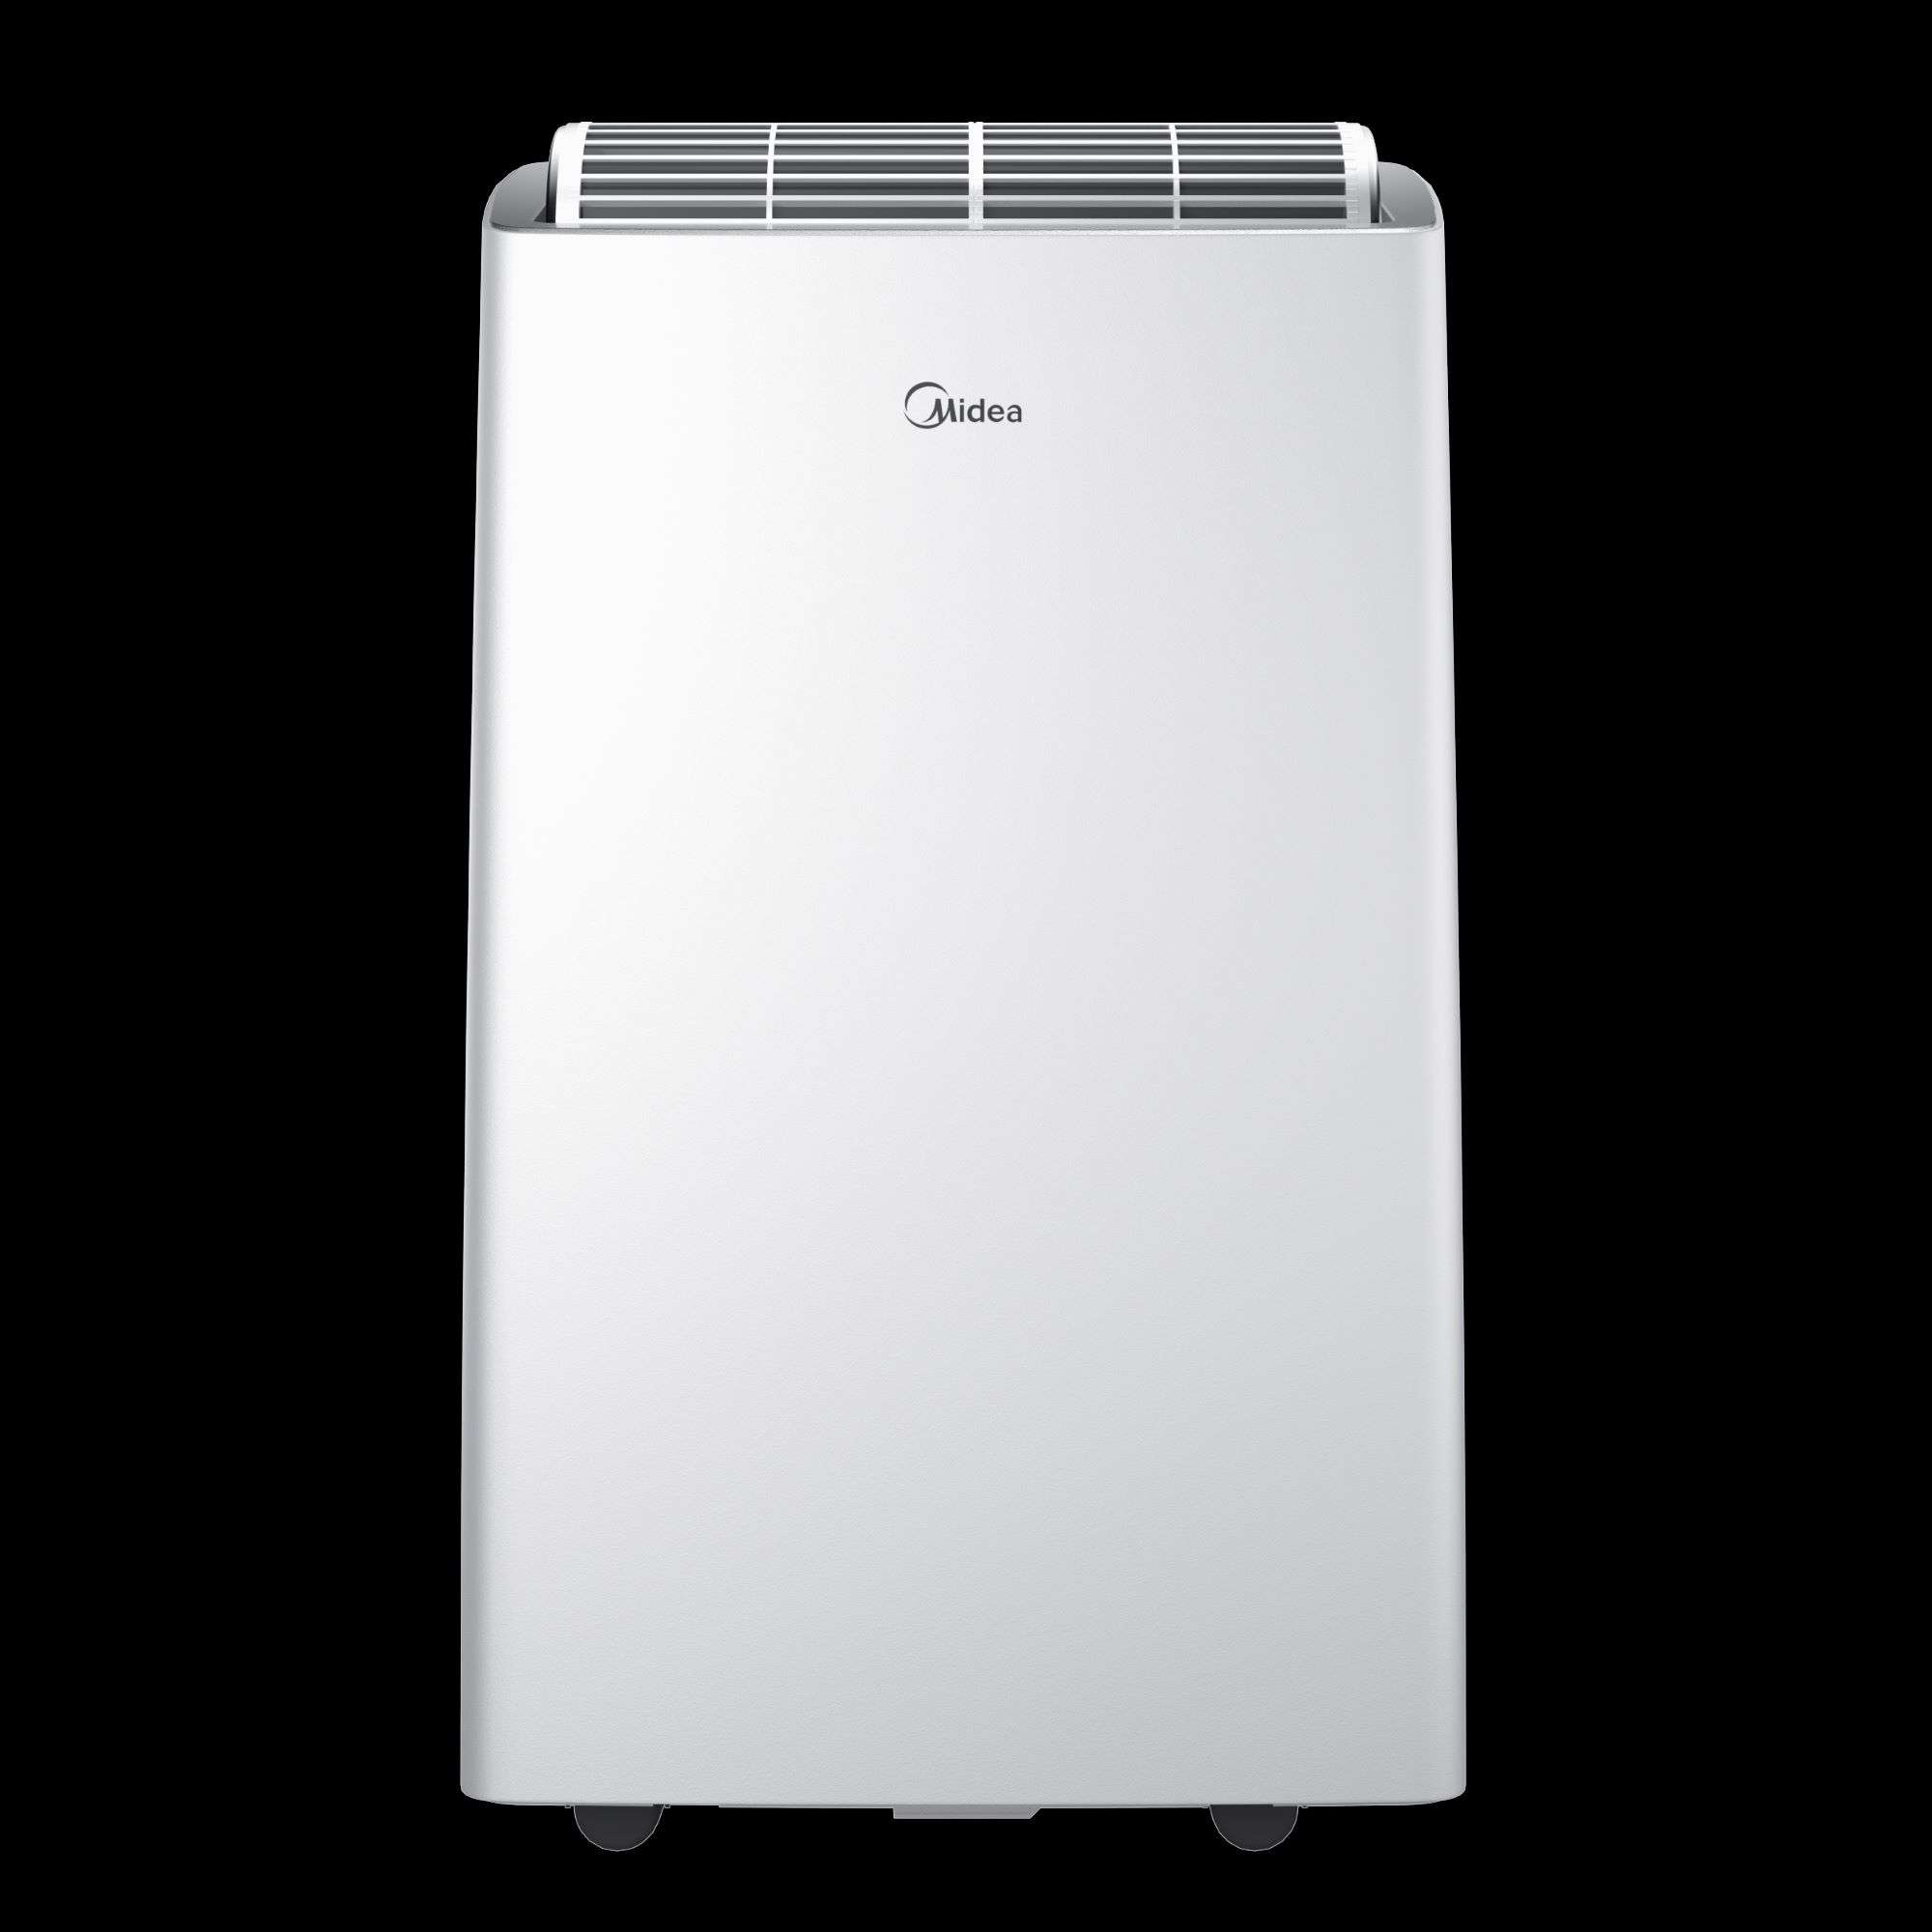  Midea Duo Smart 12,000 BTU SACC portable air conditioner